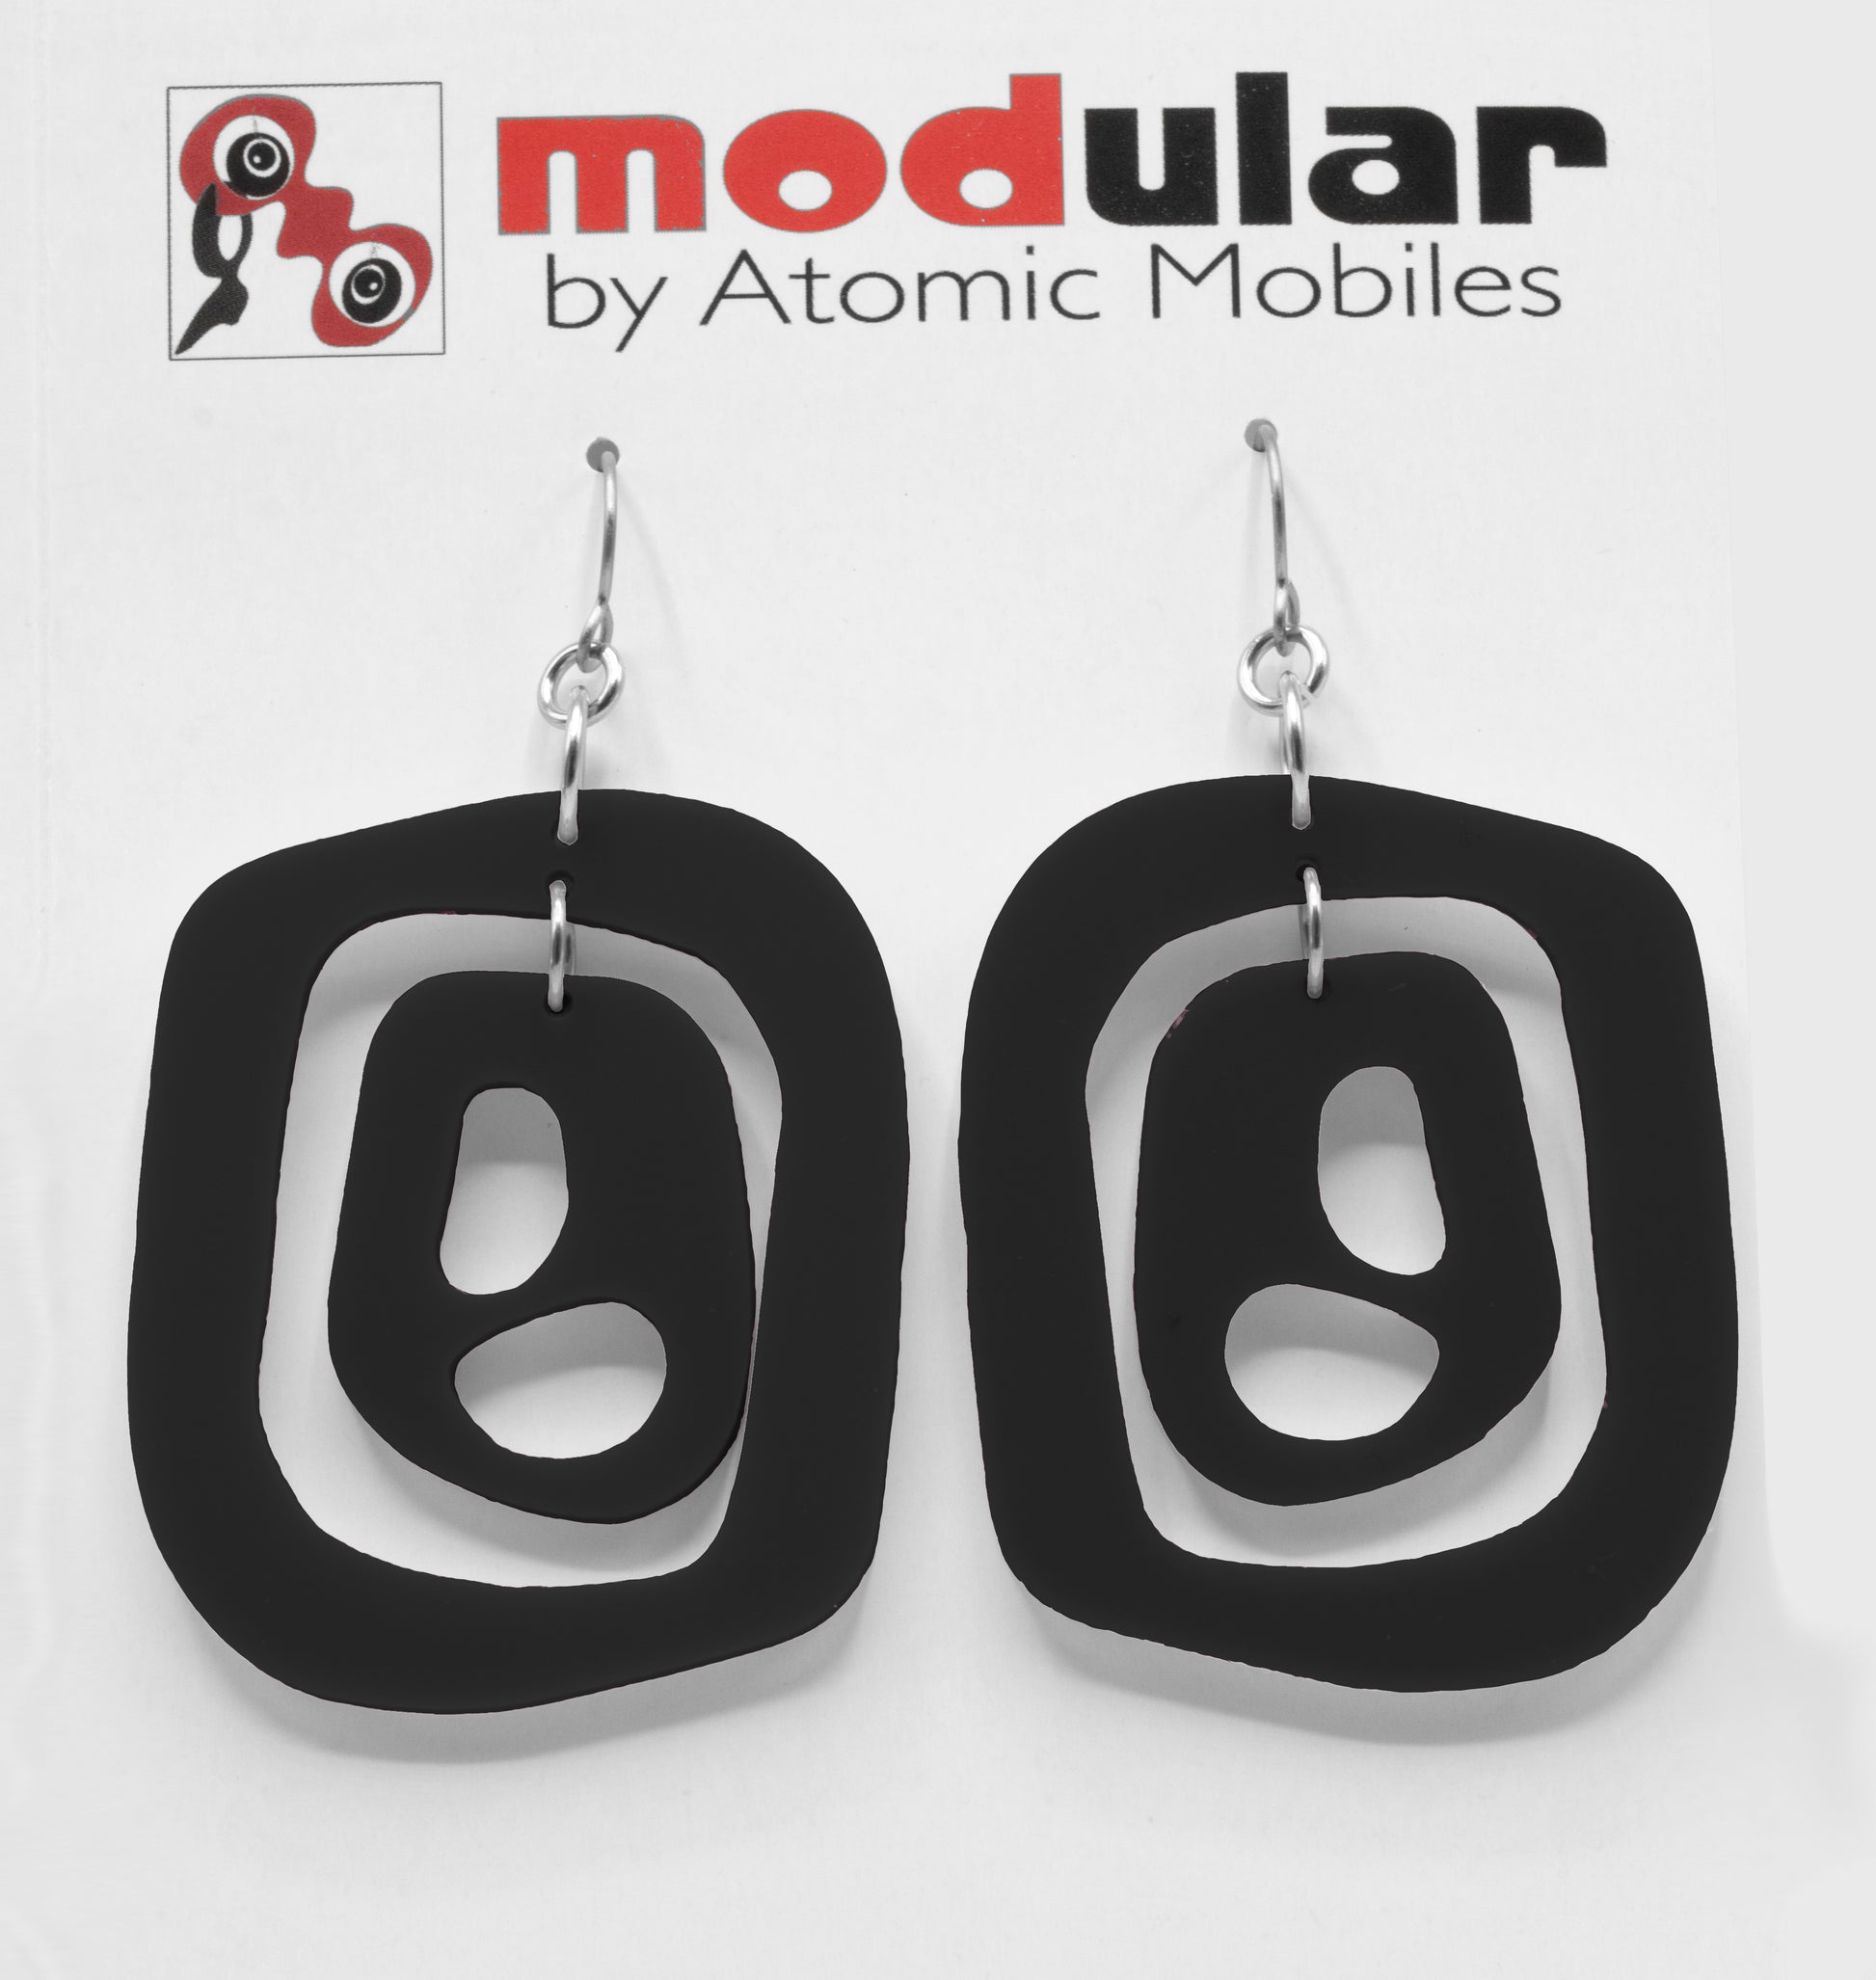 MODular Earrings - Mid 20th Statement Earrings in Black by AtomicMobiles.com - retro era mod handmade jewelry